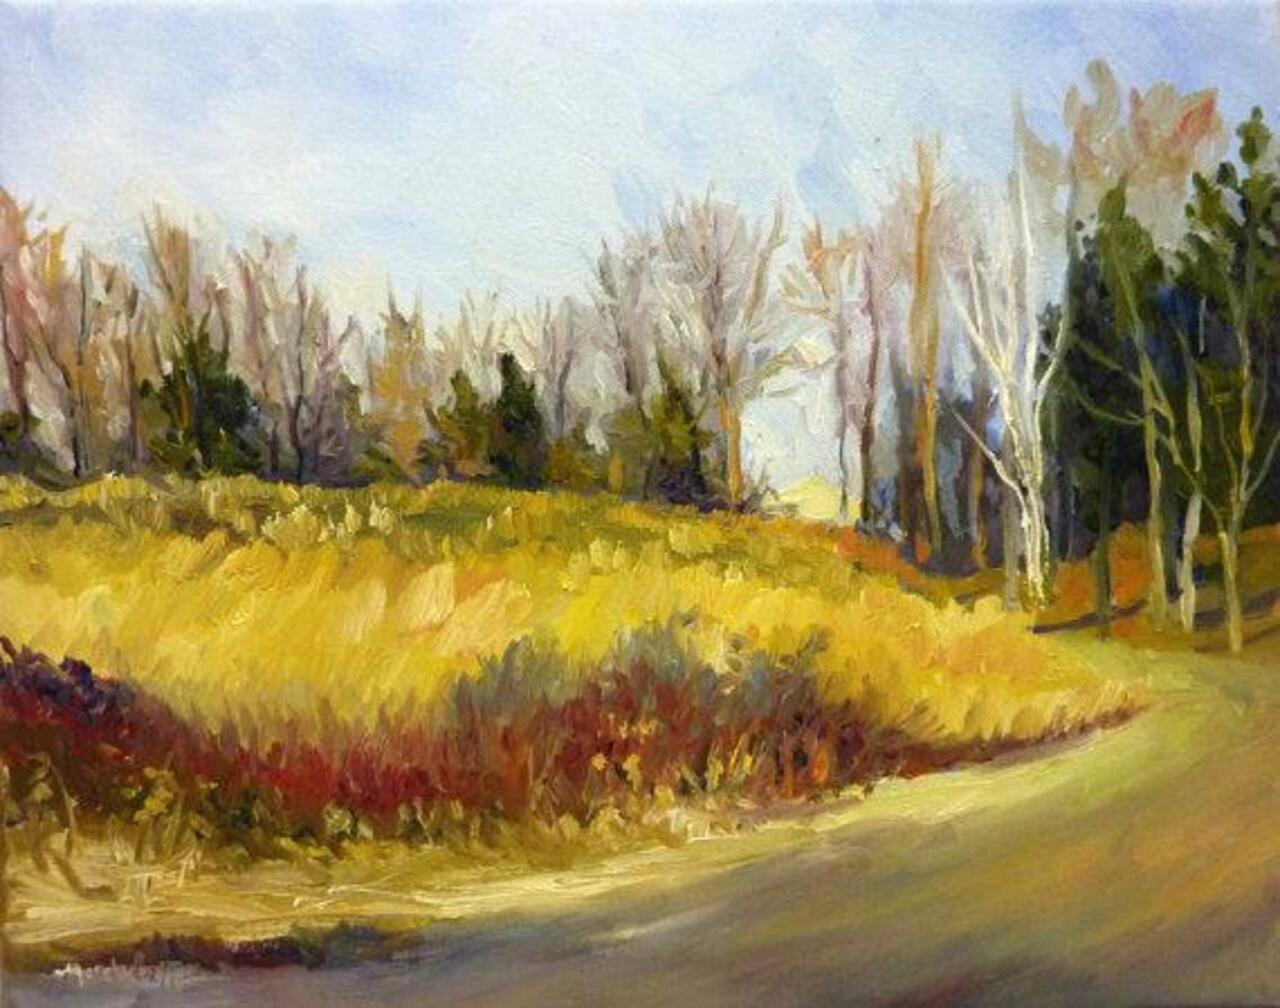 Landscape Oil Painting Colors of Winter I Fine Art http://arnd.co/NrEKj  #etsy #art #mothers day http://t.co/3YY9BReX5L